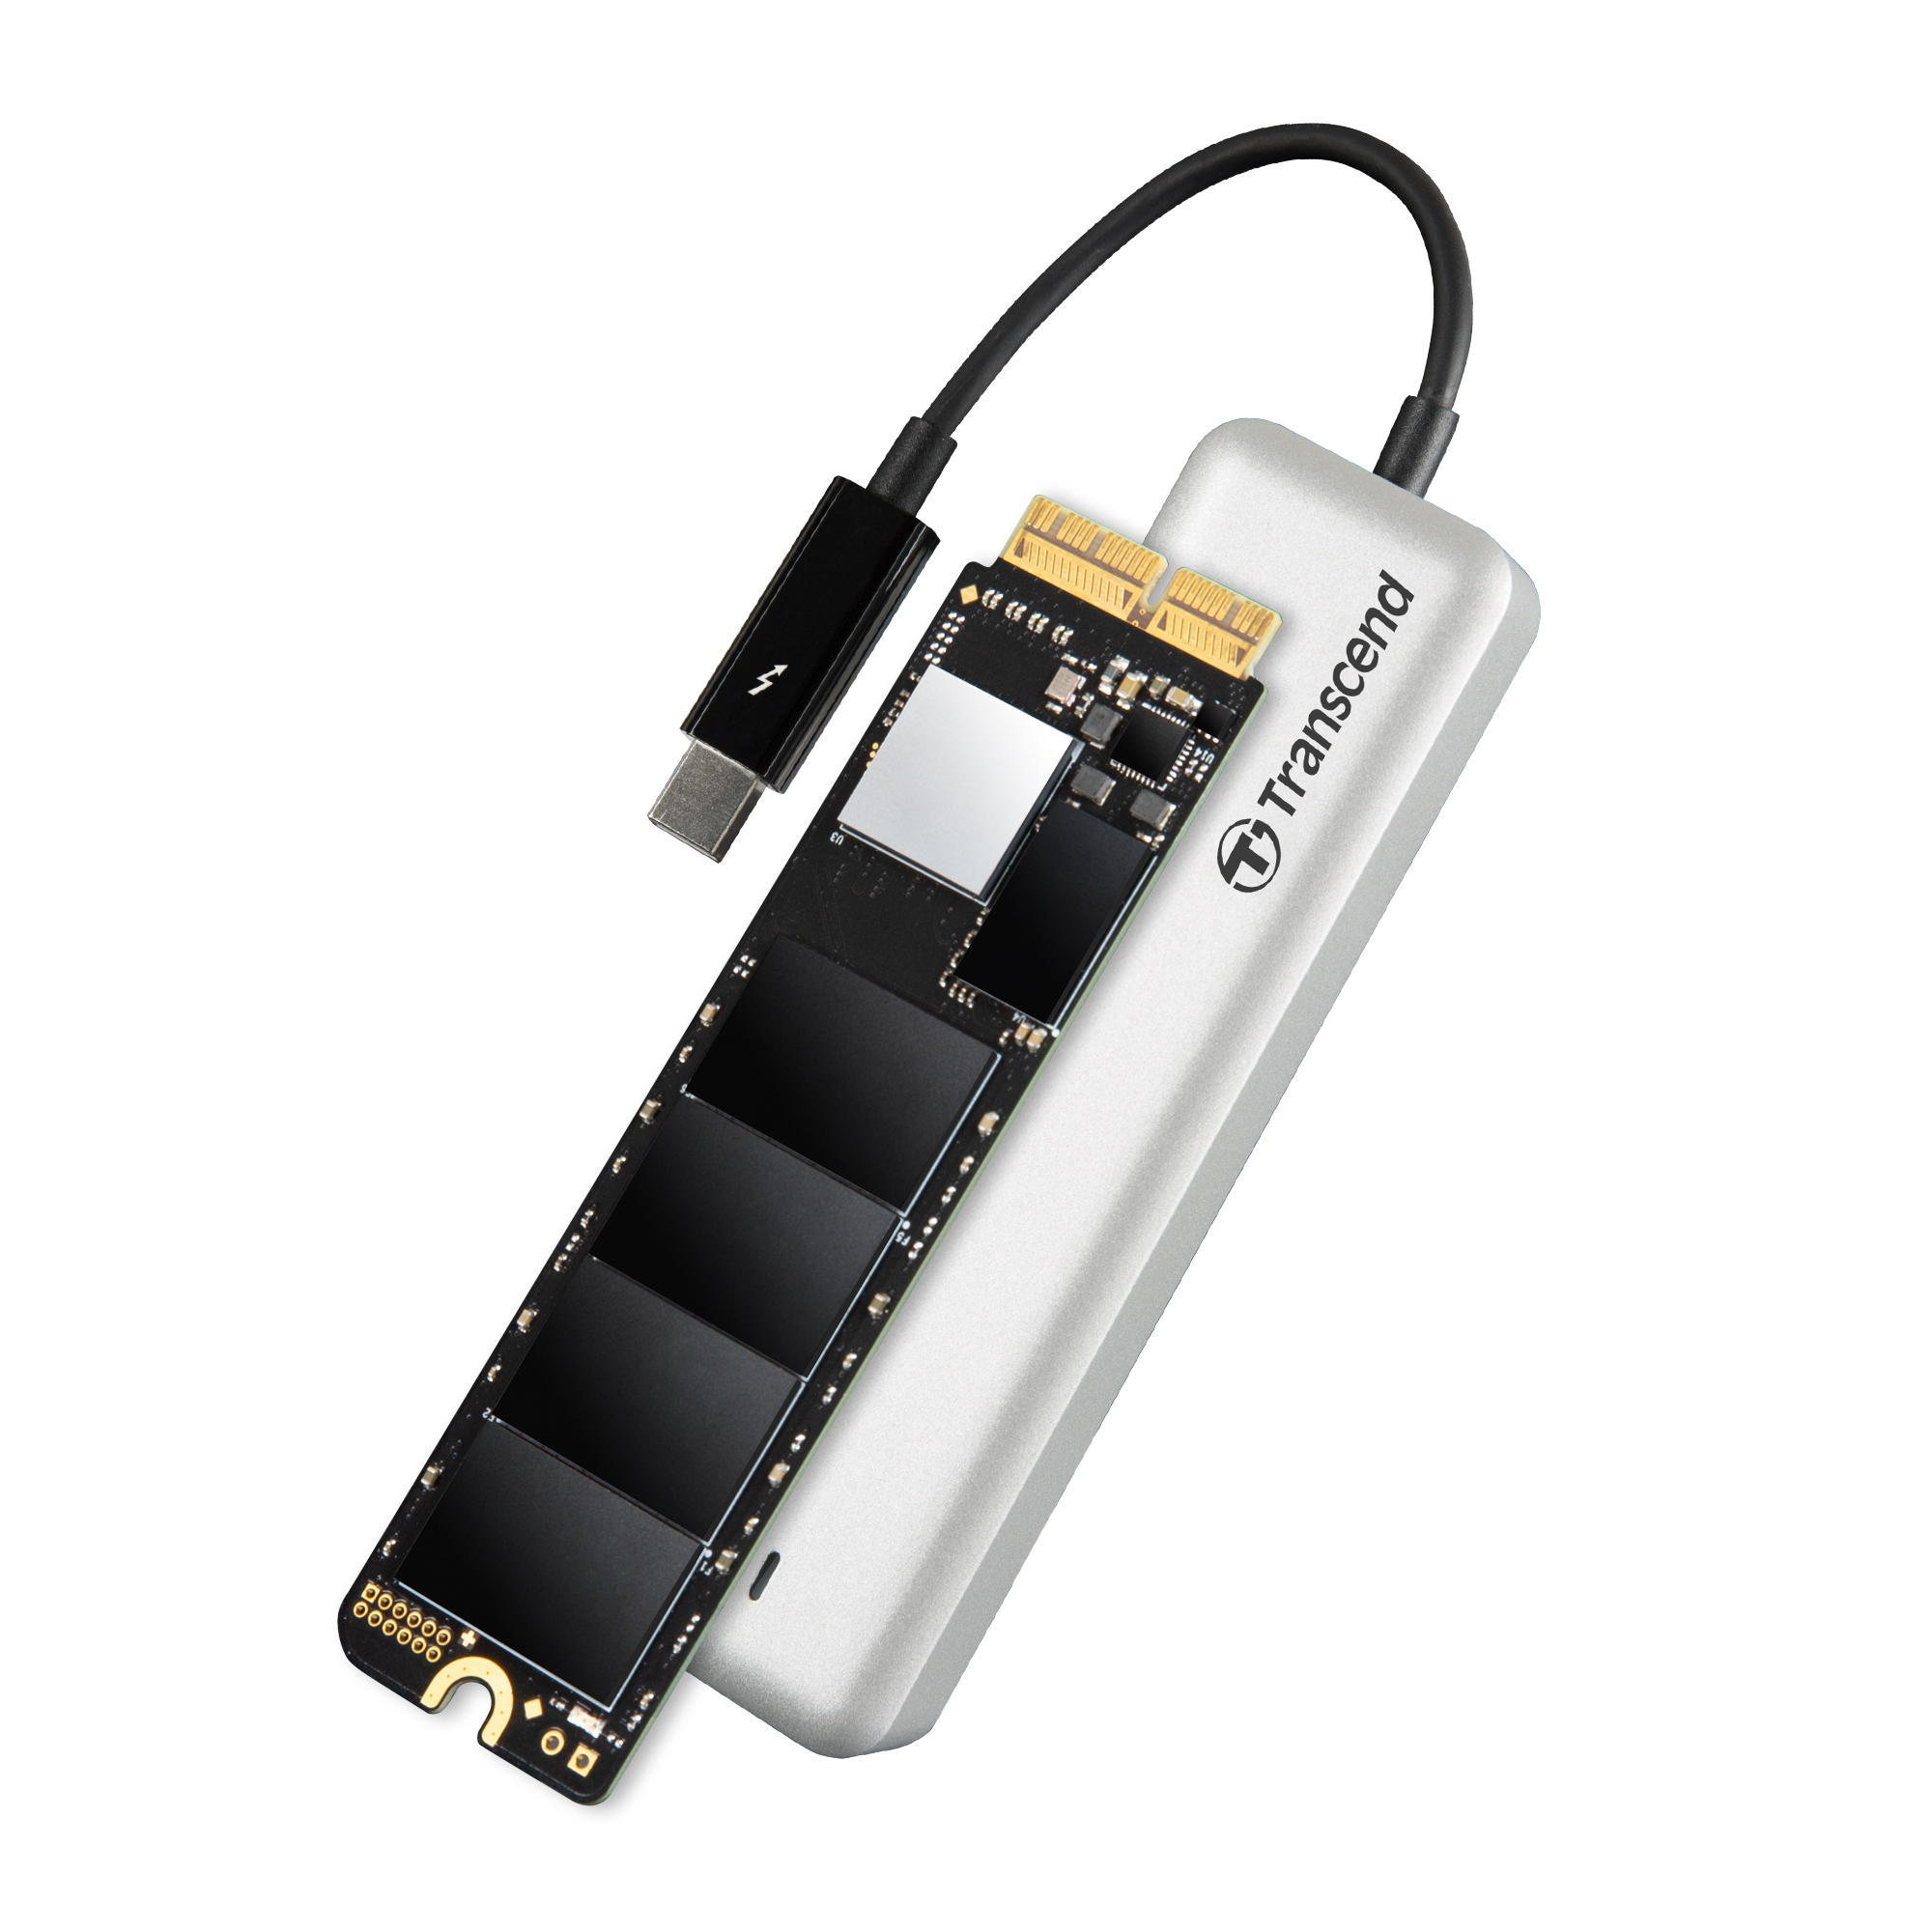 JetDrive 855/850 PCIe NVMe SSD Upgrade Kit for Mac Computers